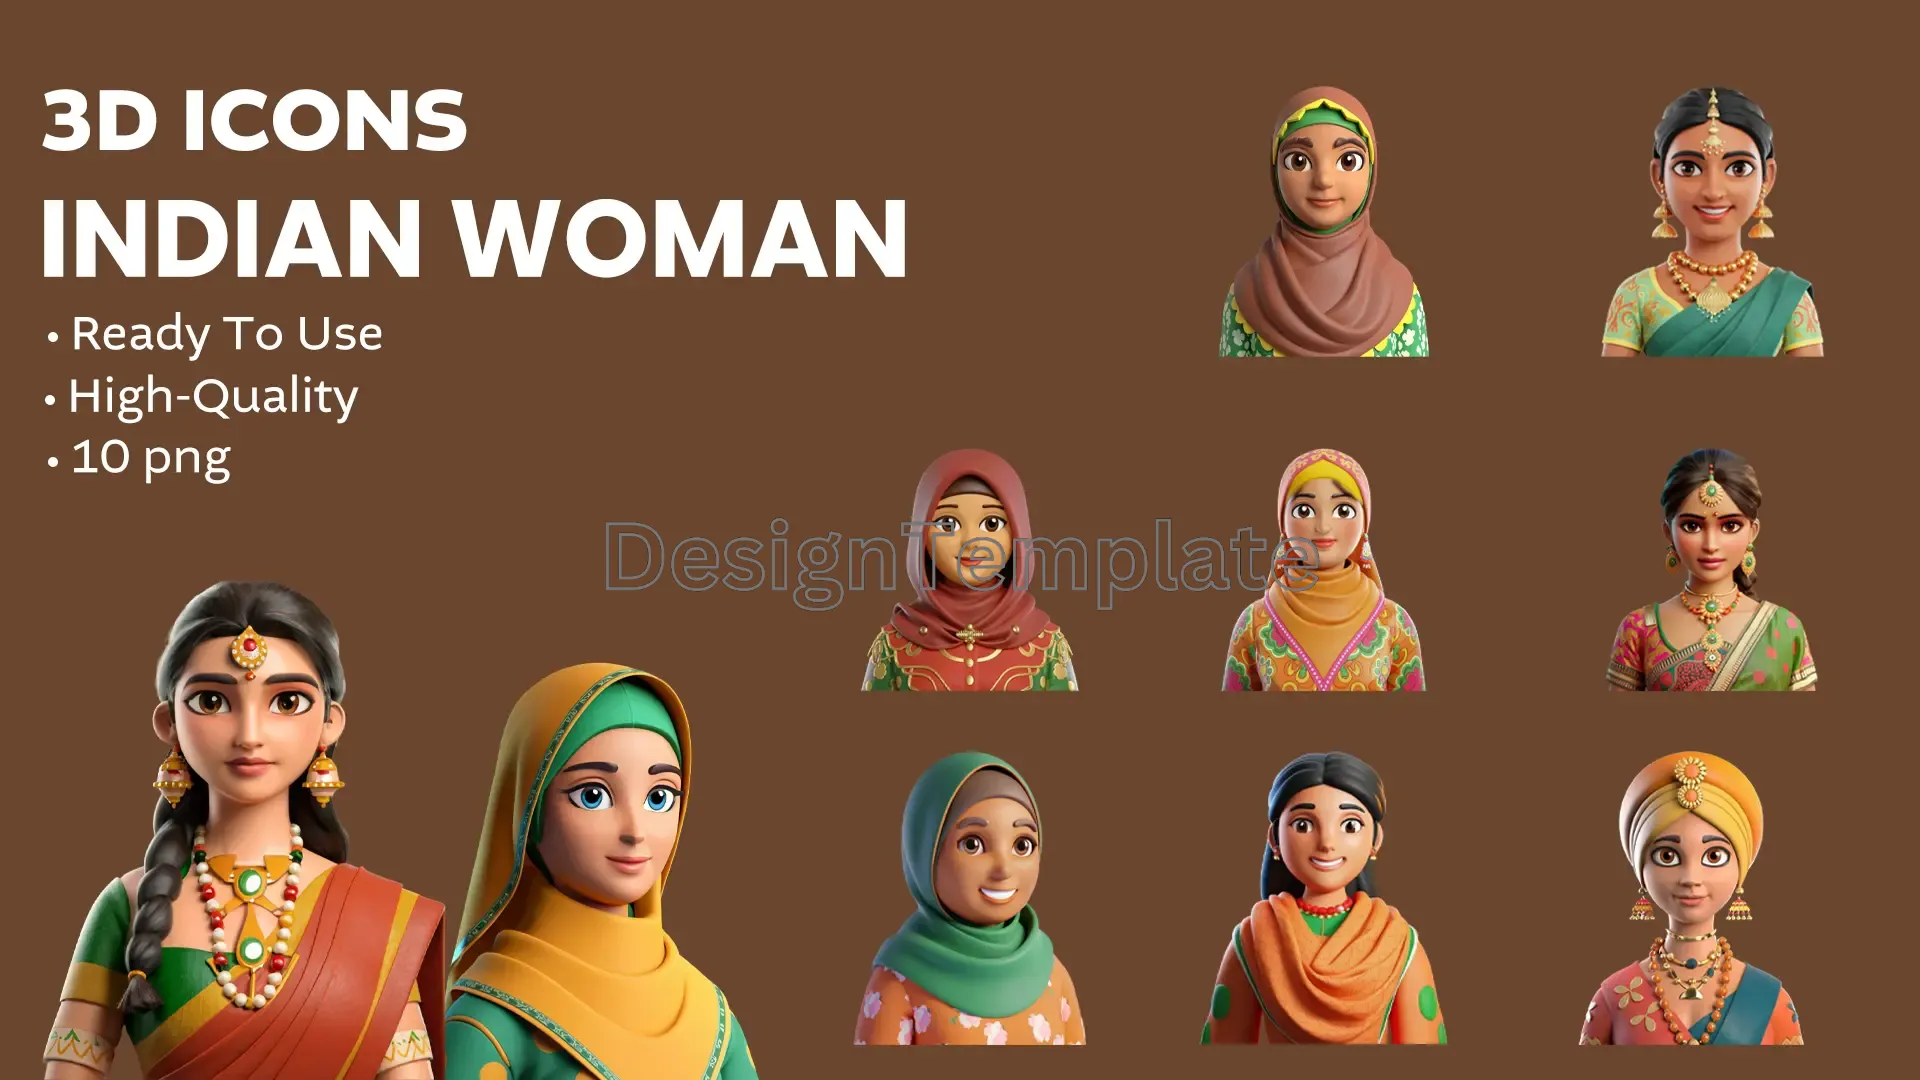 Traditional Indian Women 3D Art Elements Pack